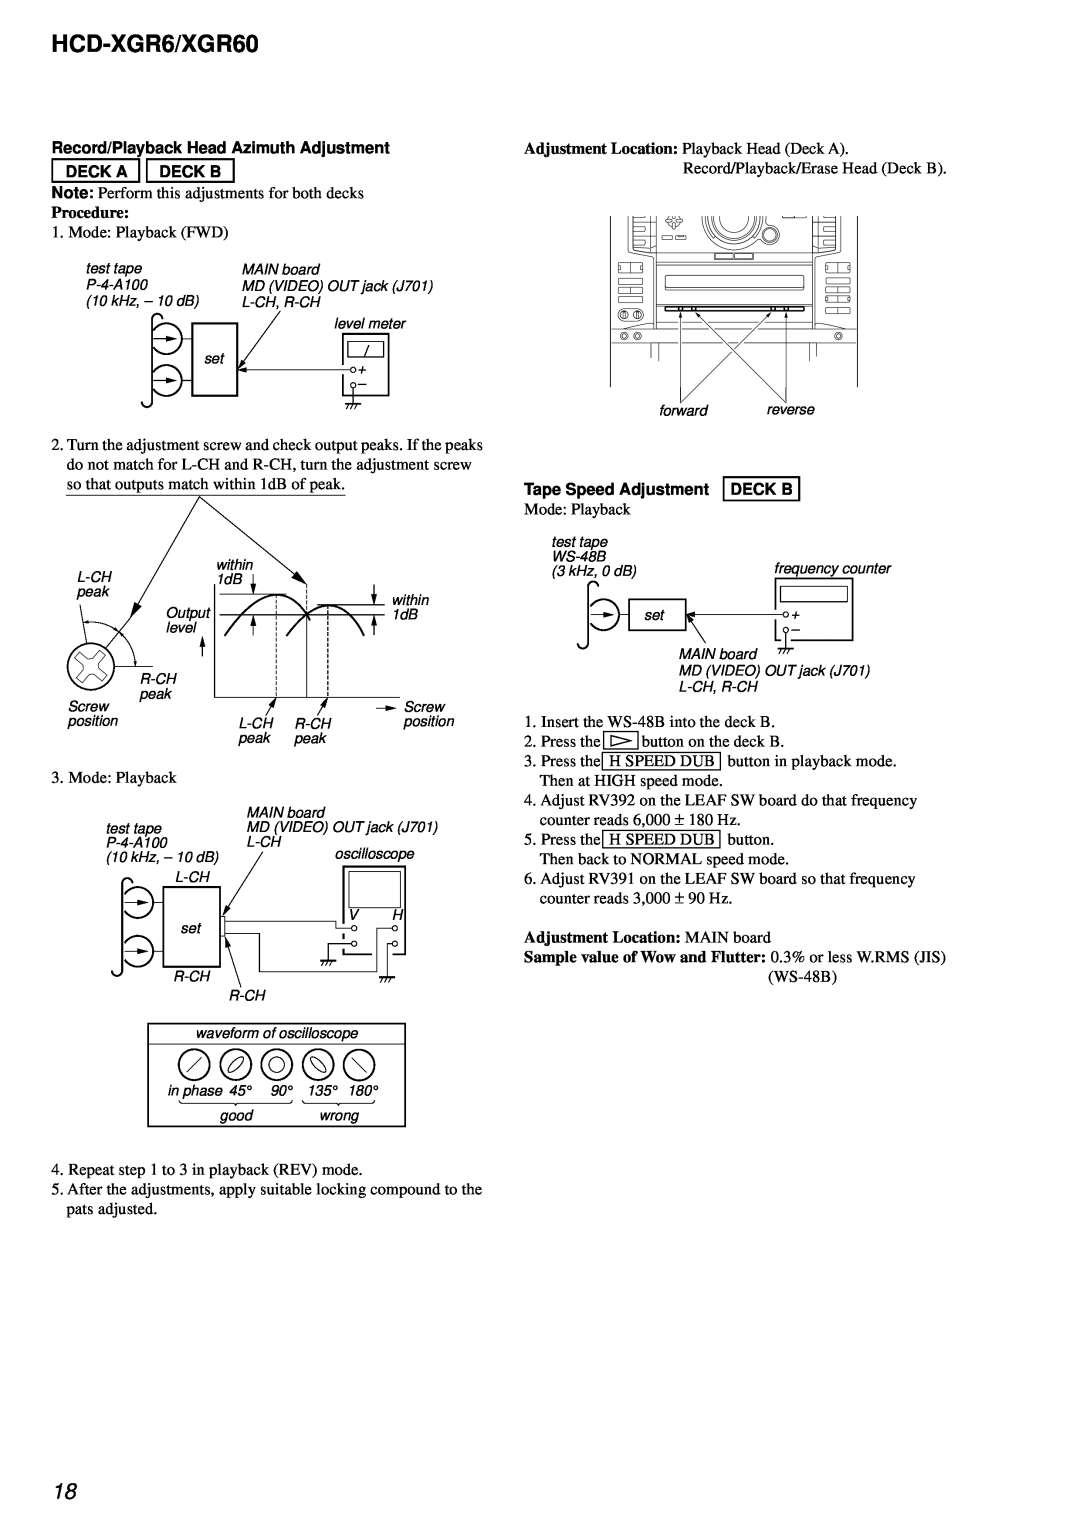 Sony HCD-XGR60 specifications HCD-XGR6/XGR60, Record/Playback Head Azimuth Adjustment DECK A DECK B, Procedure 